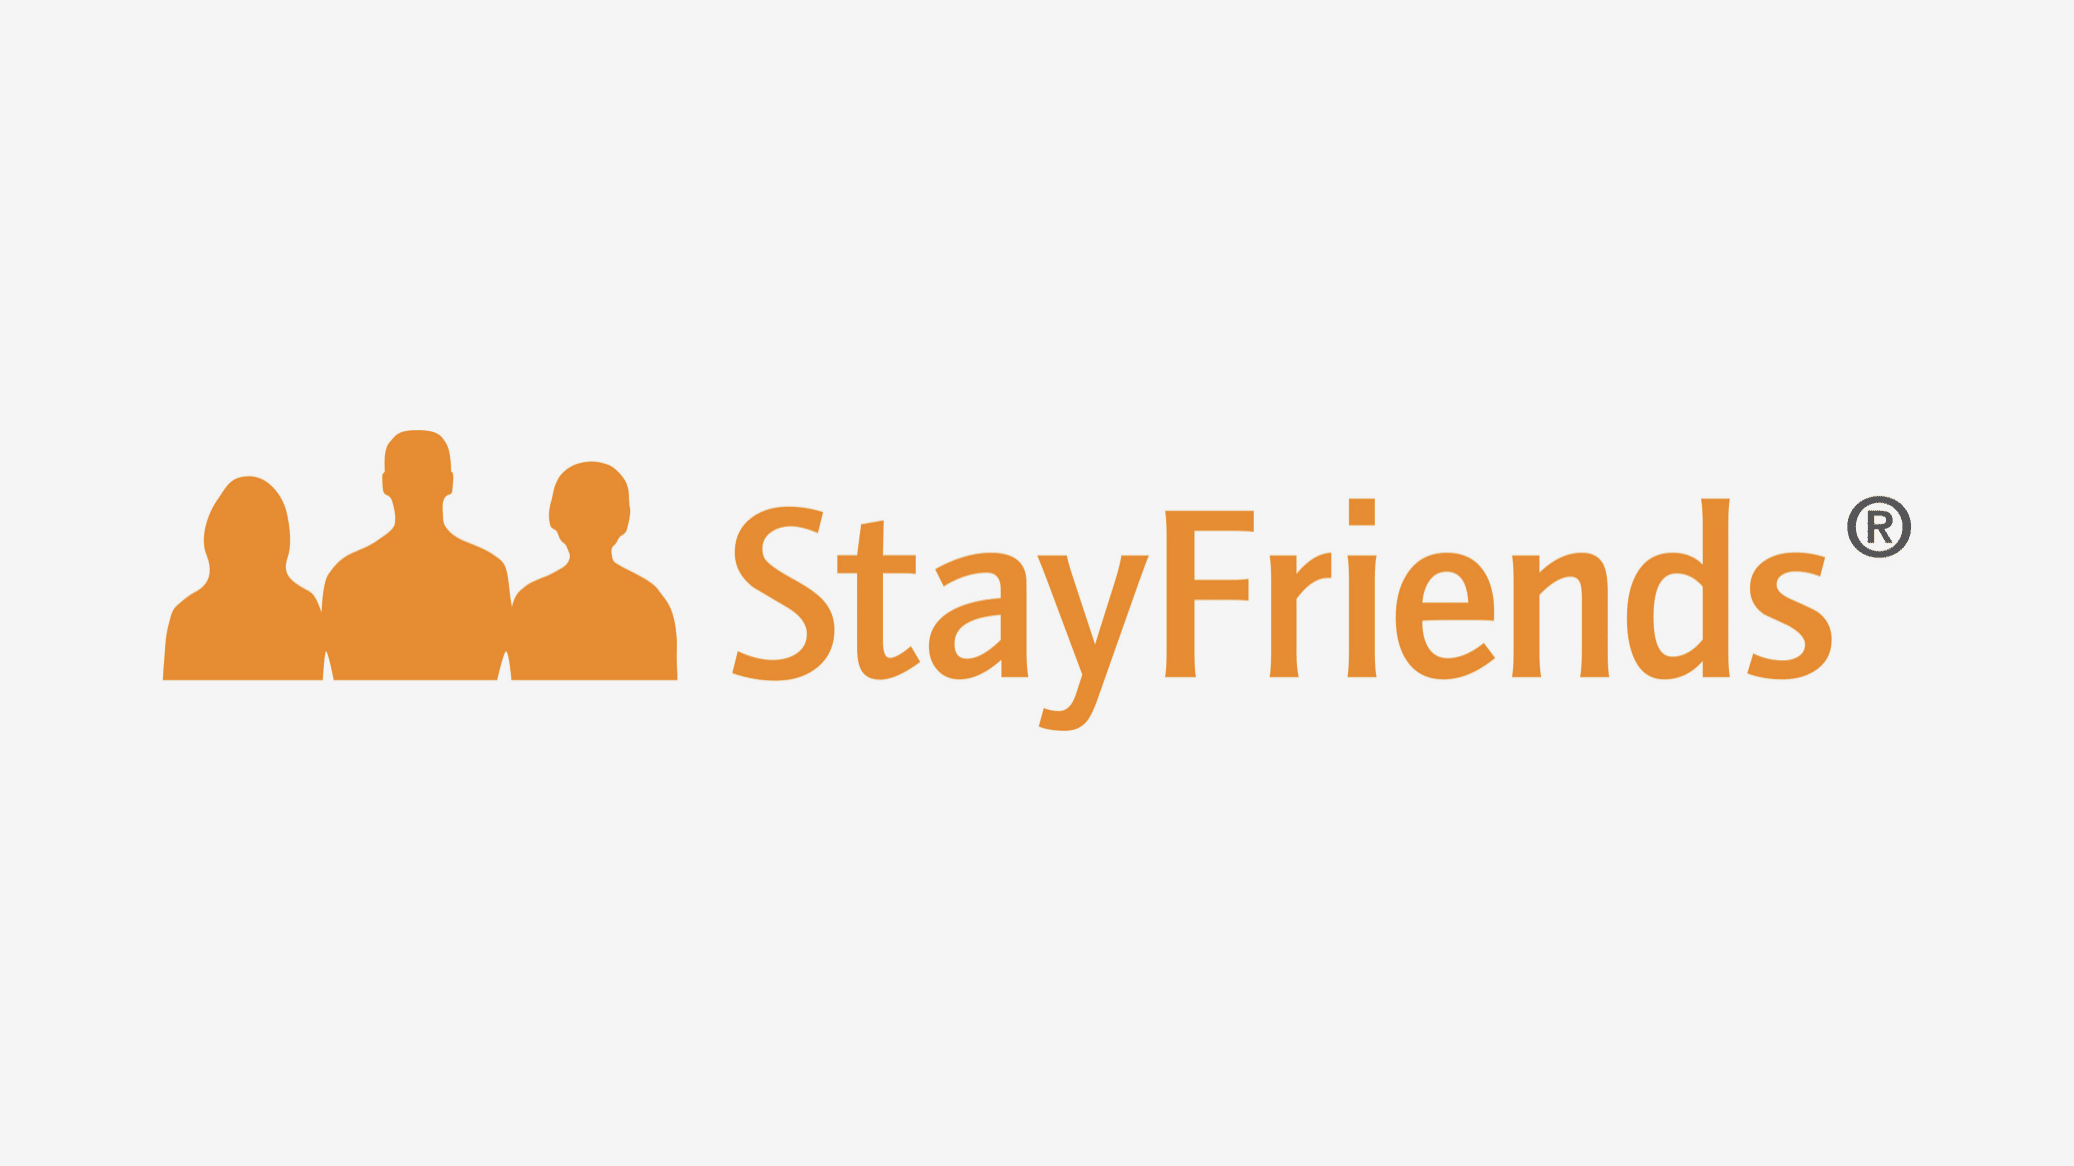 Stayfriends account temporär deaktiviert